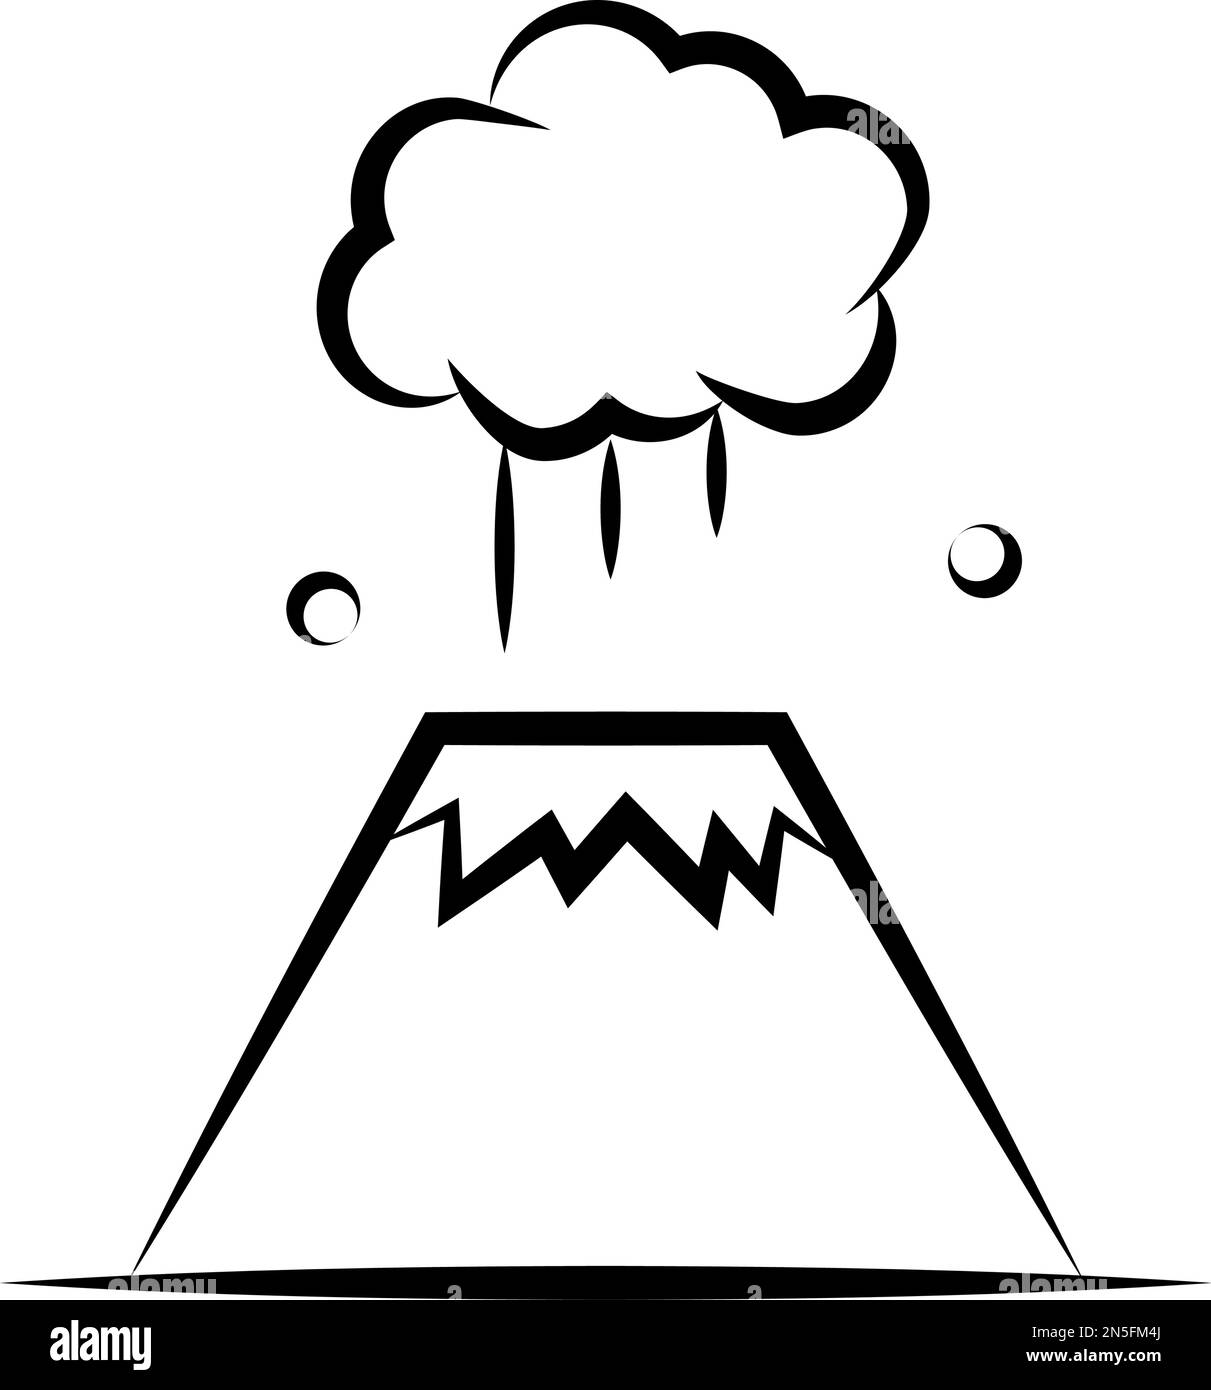 Japanese style erupting volcano icon. Editable vector. Stock Vector